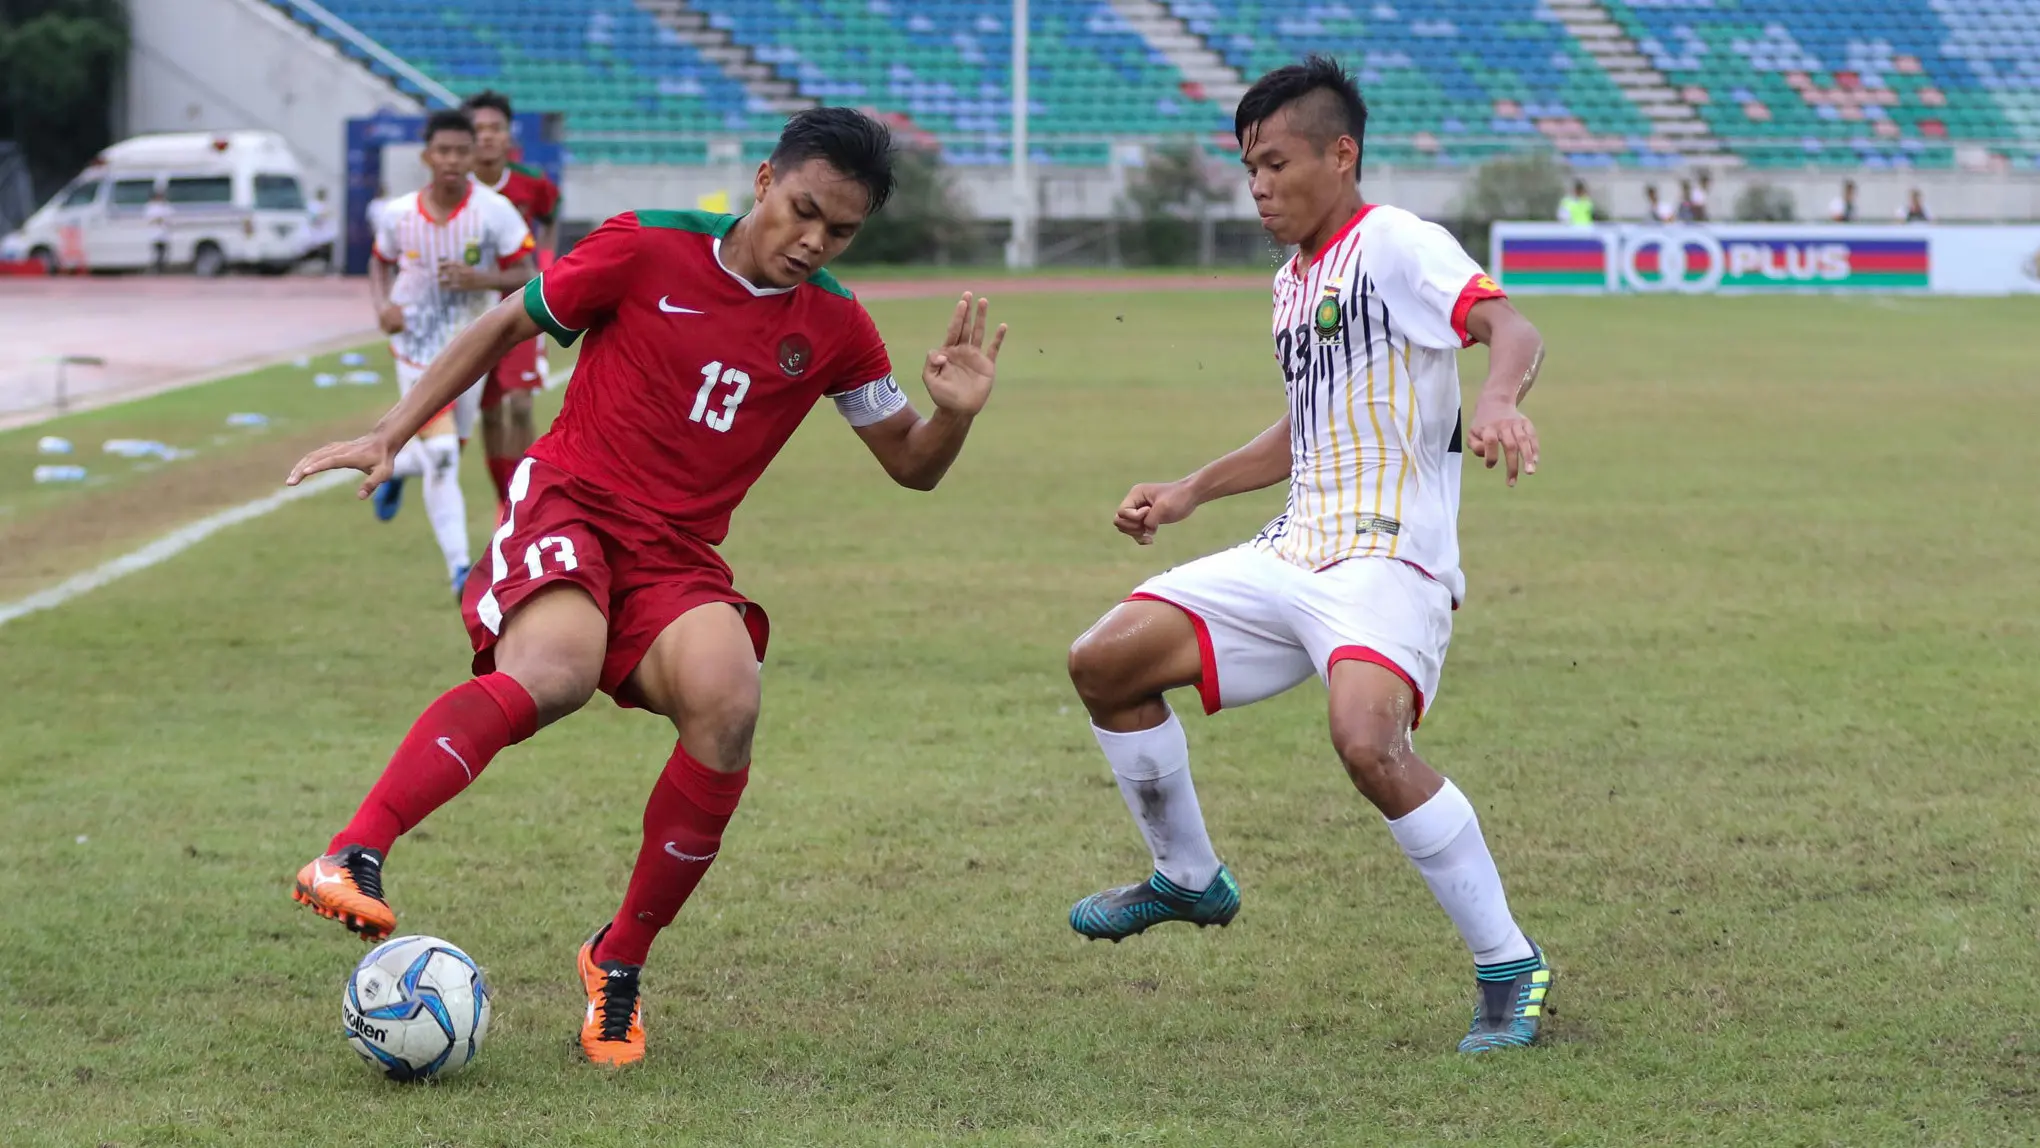 Kapten timnas Indonesia U-19, Rachmat Irianto beraksi saat melawan Brunei pada laga Grup B Piala AFF U-18 2017. Timnas U-19 menang delapan gol tanpa balas di Thuwunna Stadium, Rabu (13/9/2017). (Liputan6.com/Yoppy Renato)